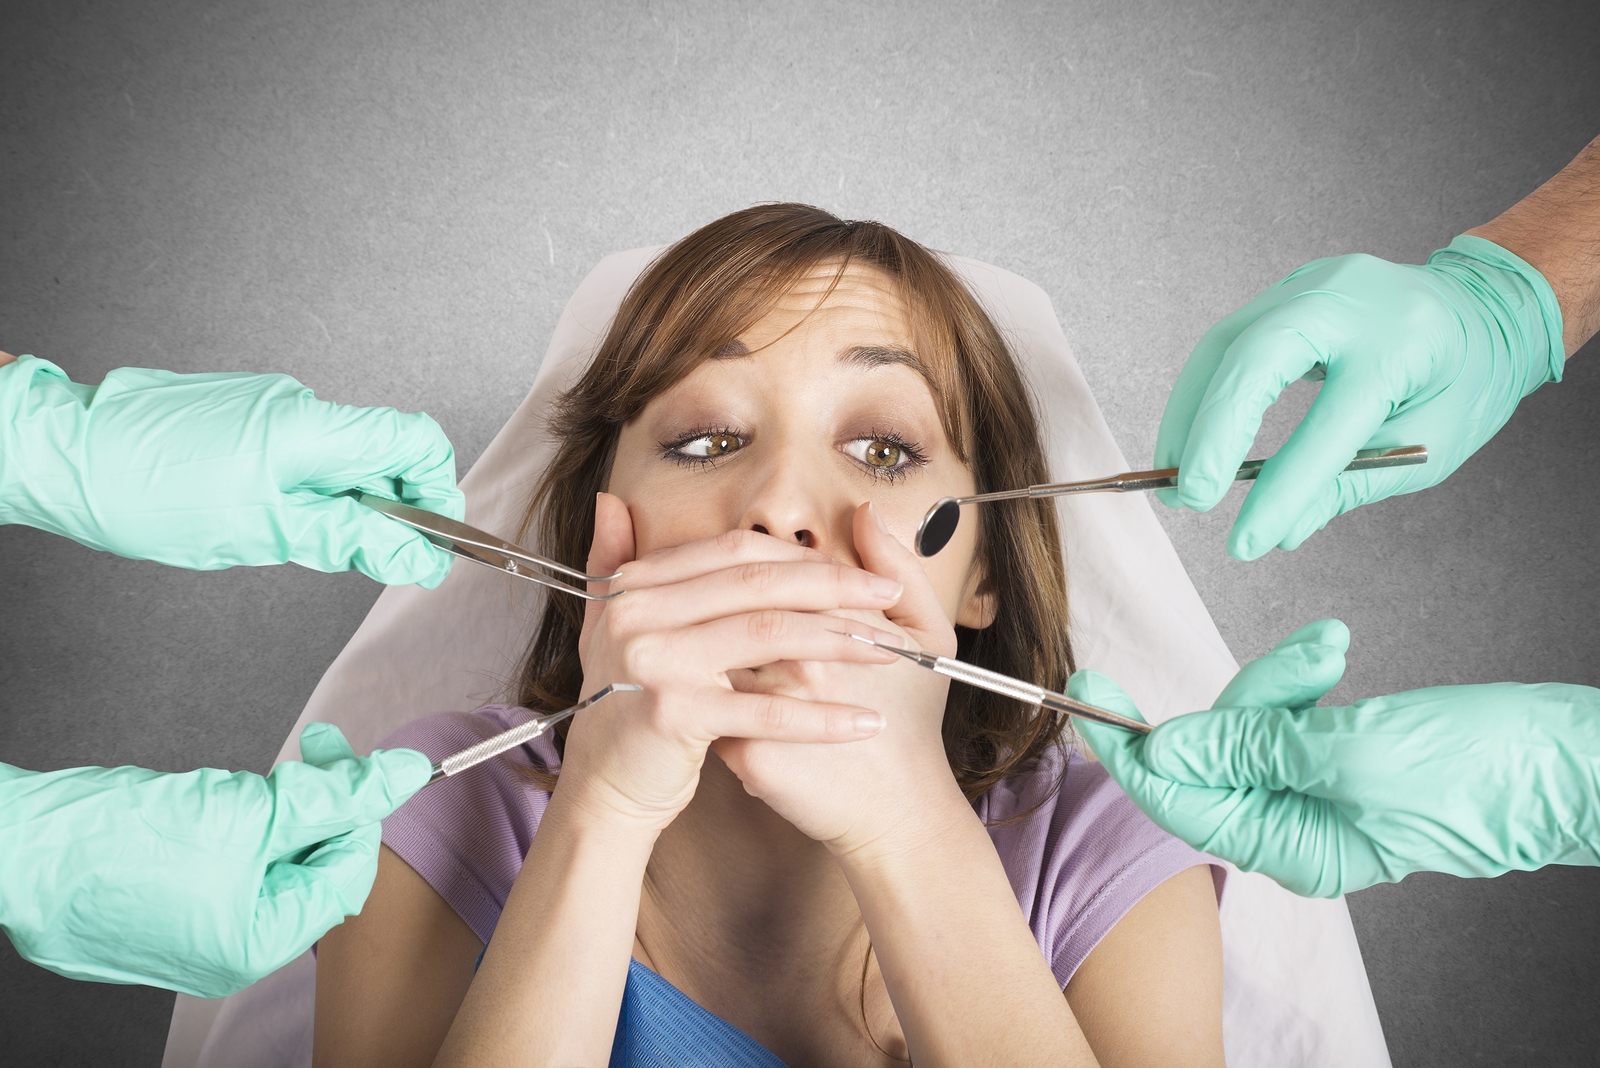 Ways to Endure Handle Dental Anxiety